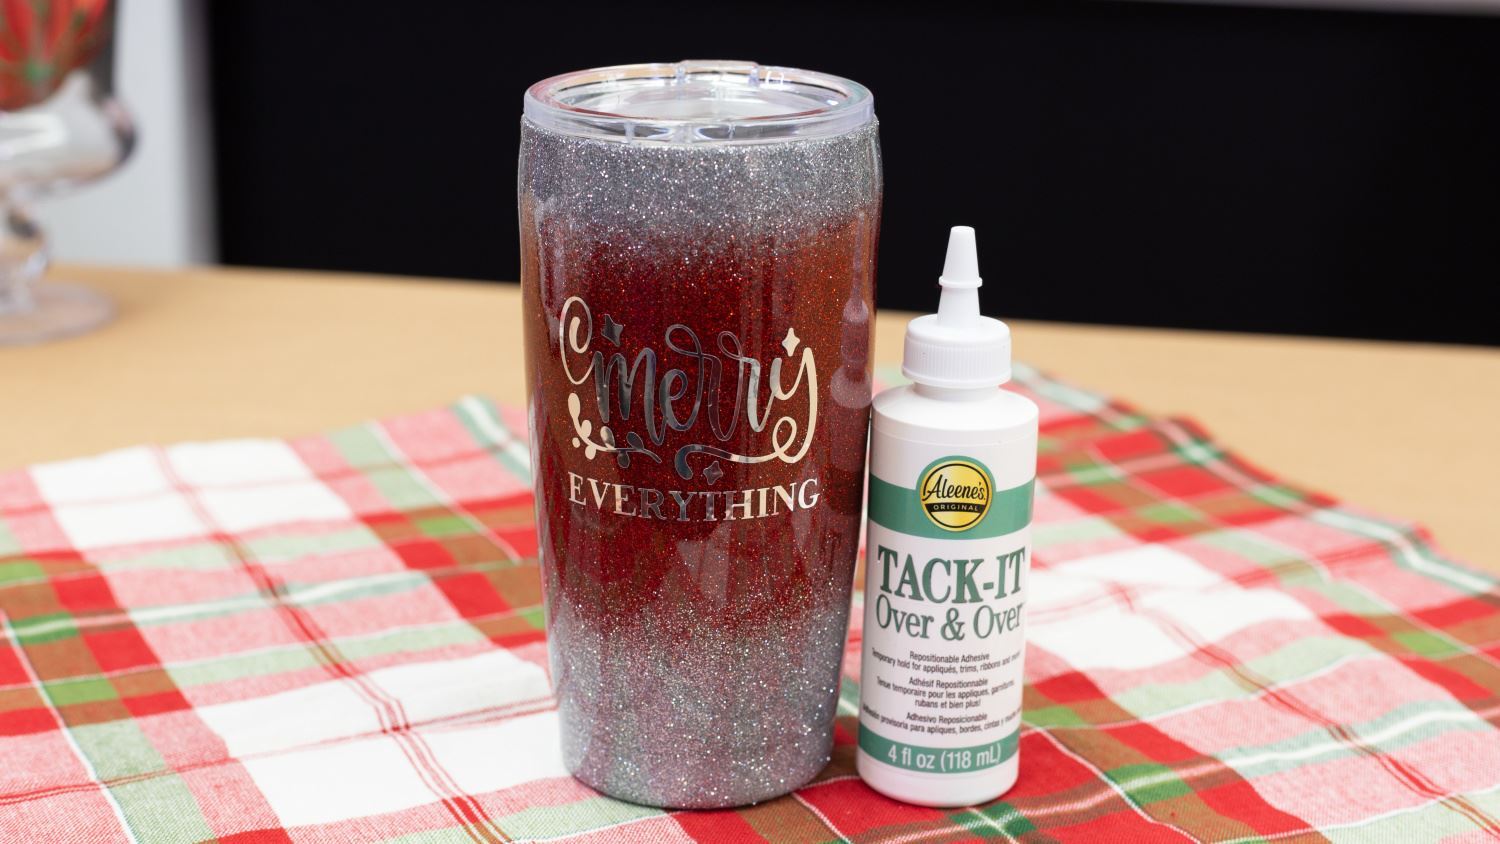 Aleene's Original Glues - Make a Glitter Tumbler with the Tack-It